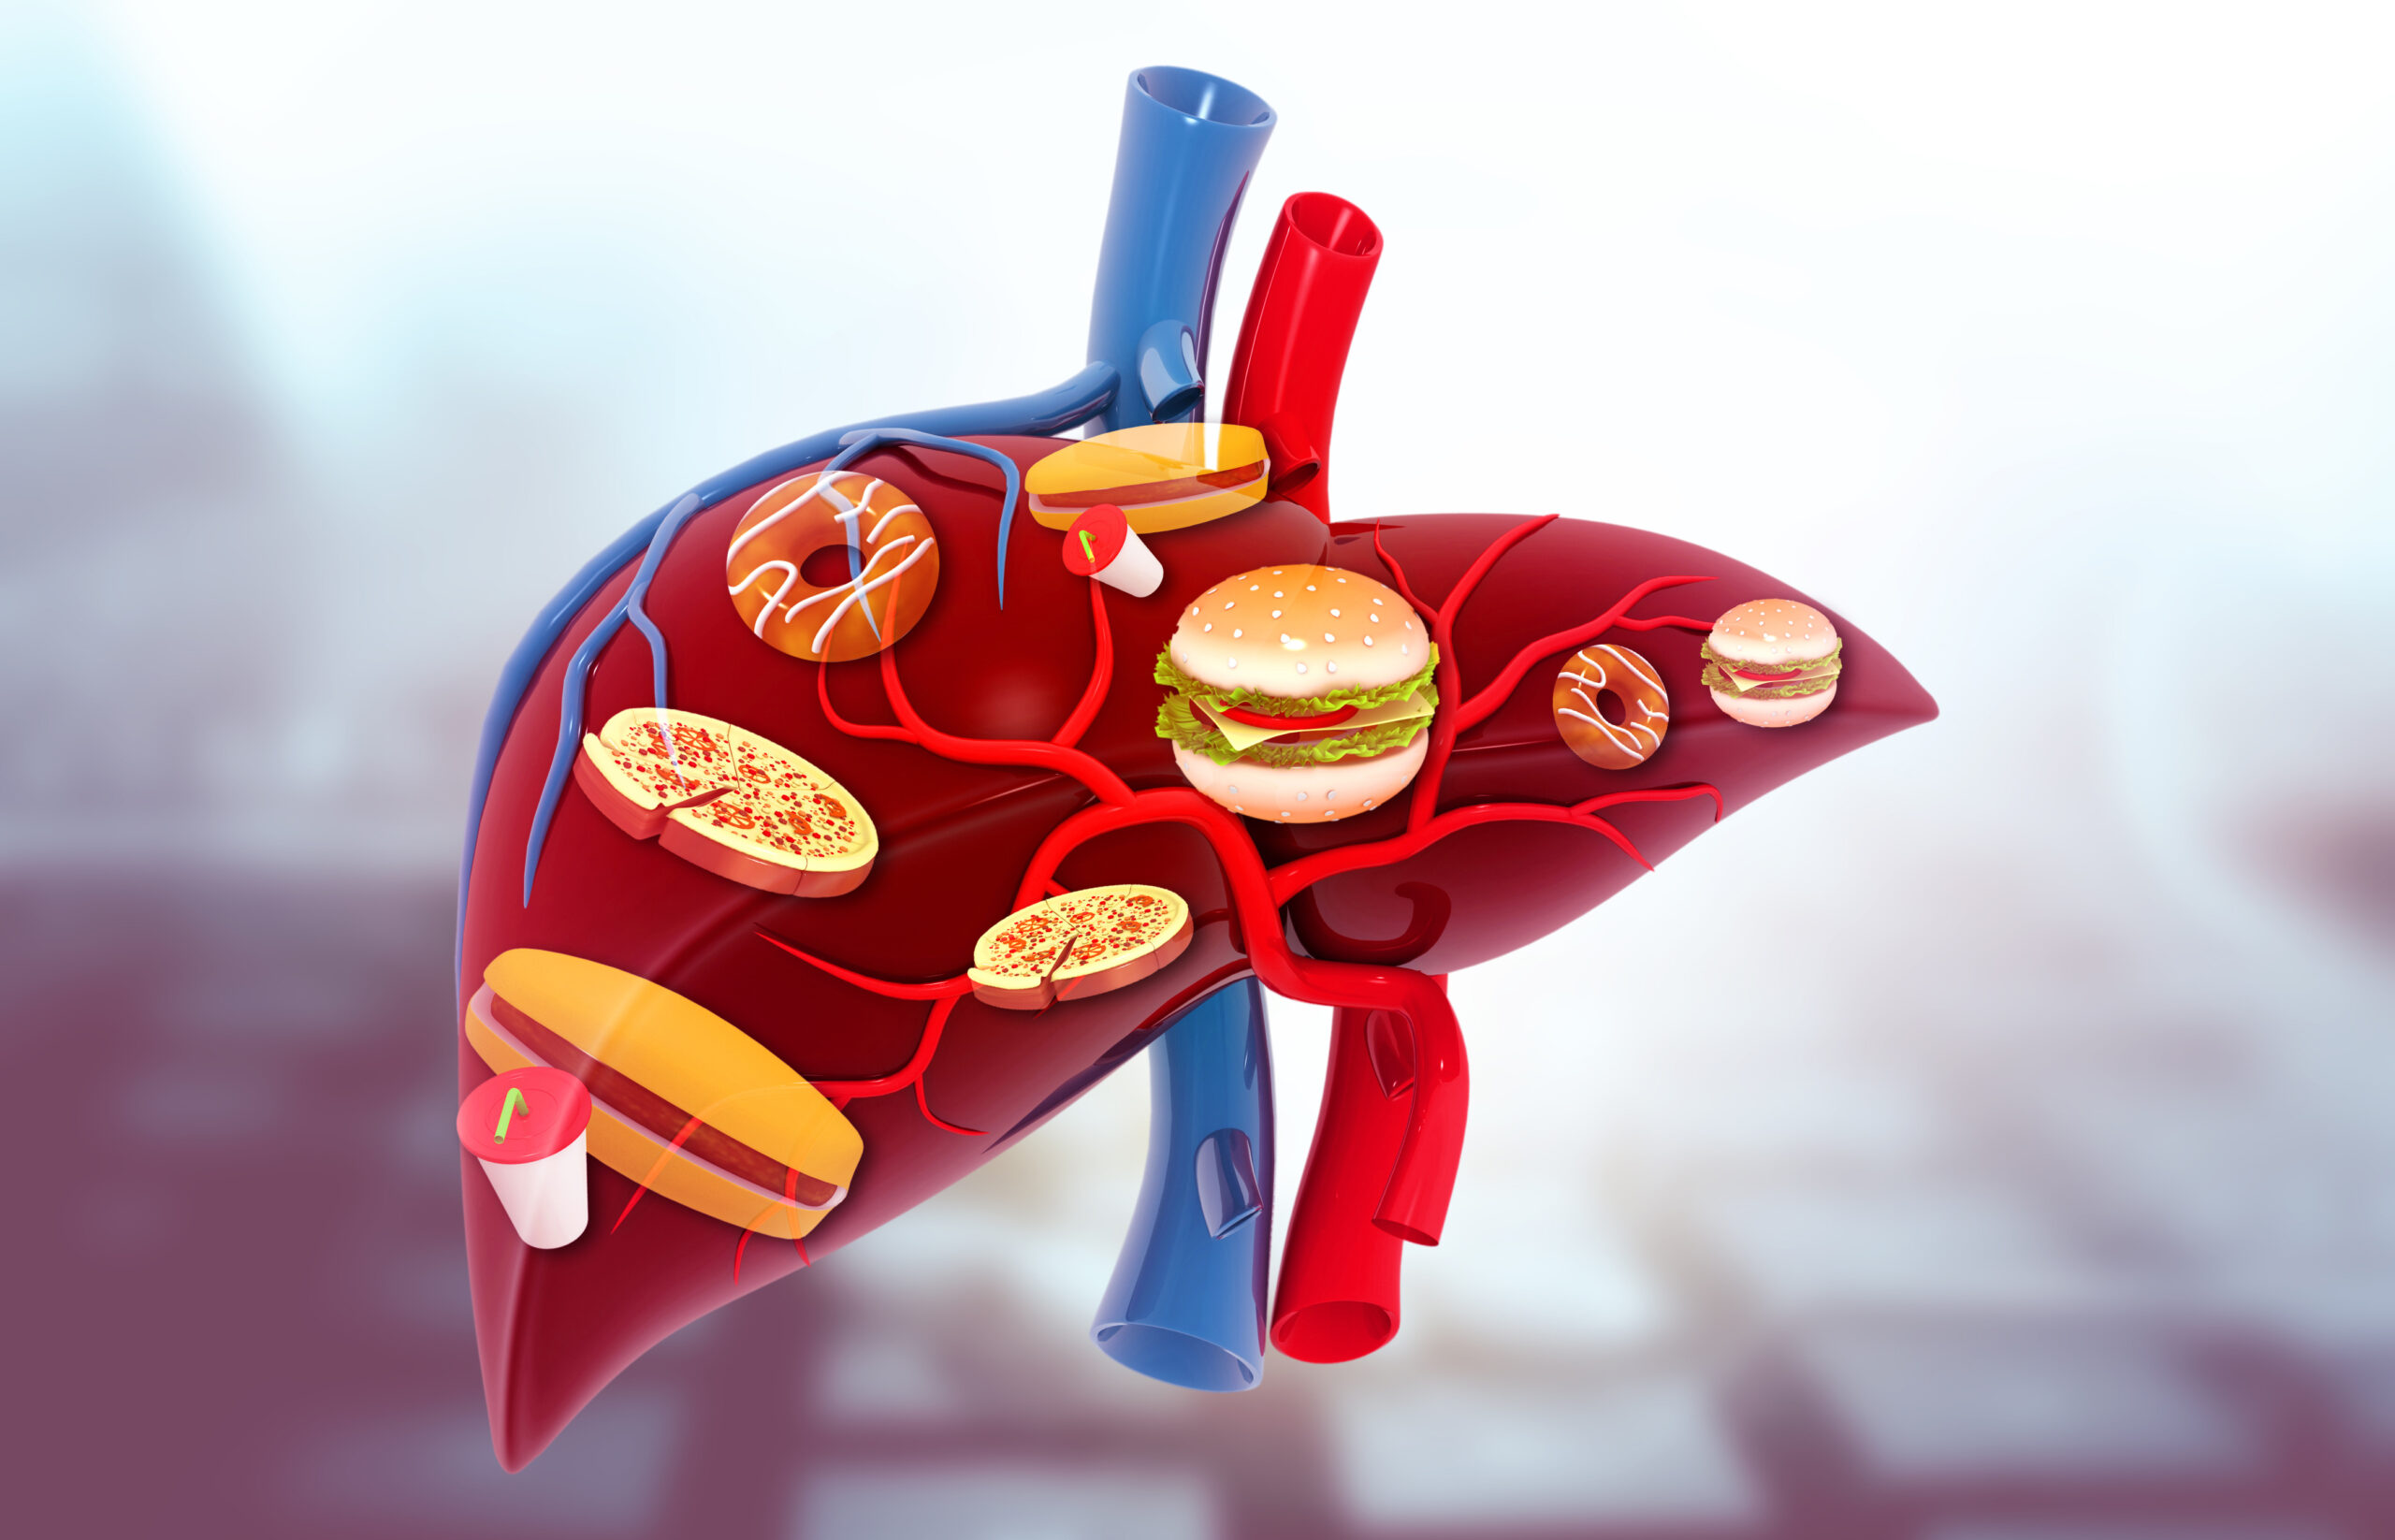 Human liver anatomy with junk food, fast food, unhealthy food.3d illustration